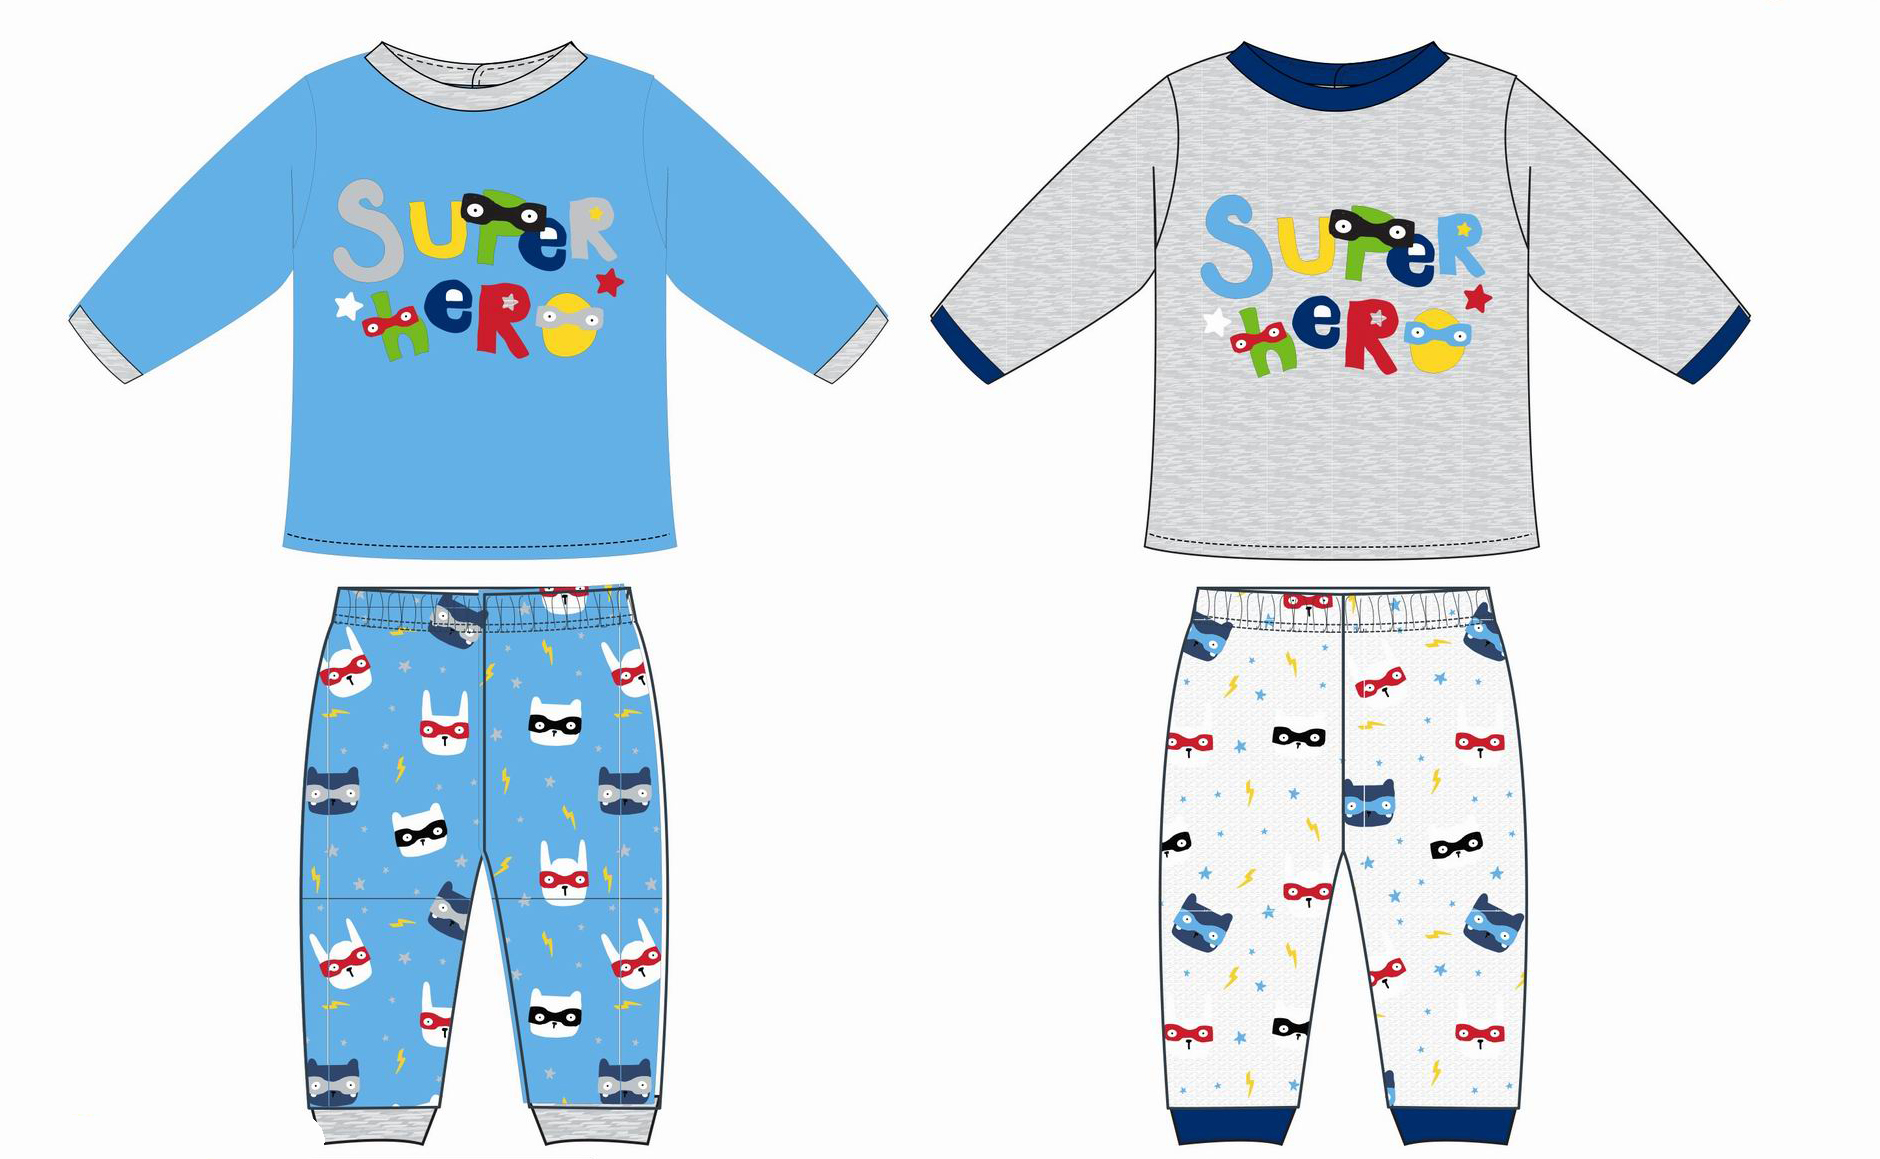 Boy's 2 PC. Rib Pajama Sets w/ Short-Sleeve SHIRT & Pull-On Pants - Superhero Print - Ages 6-10